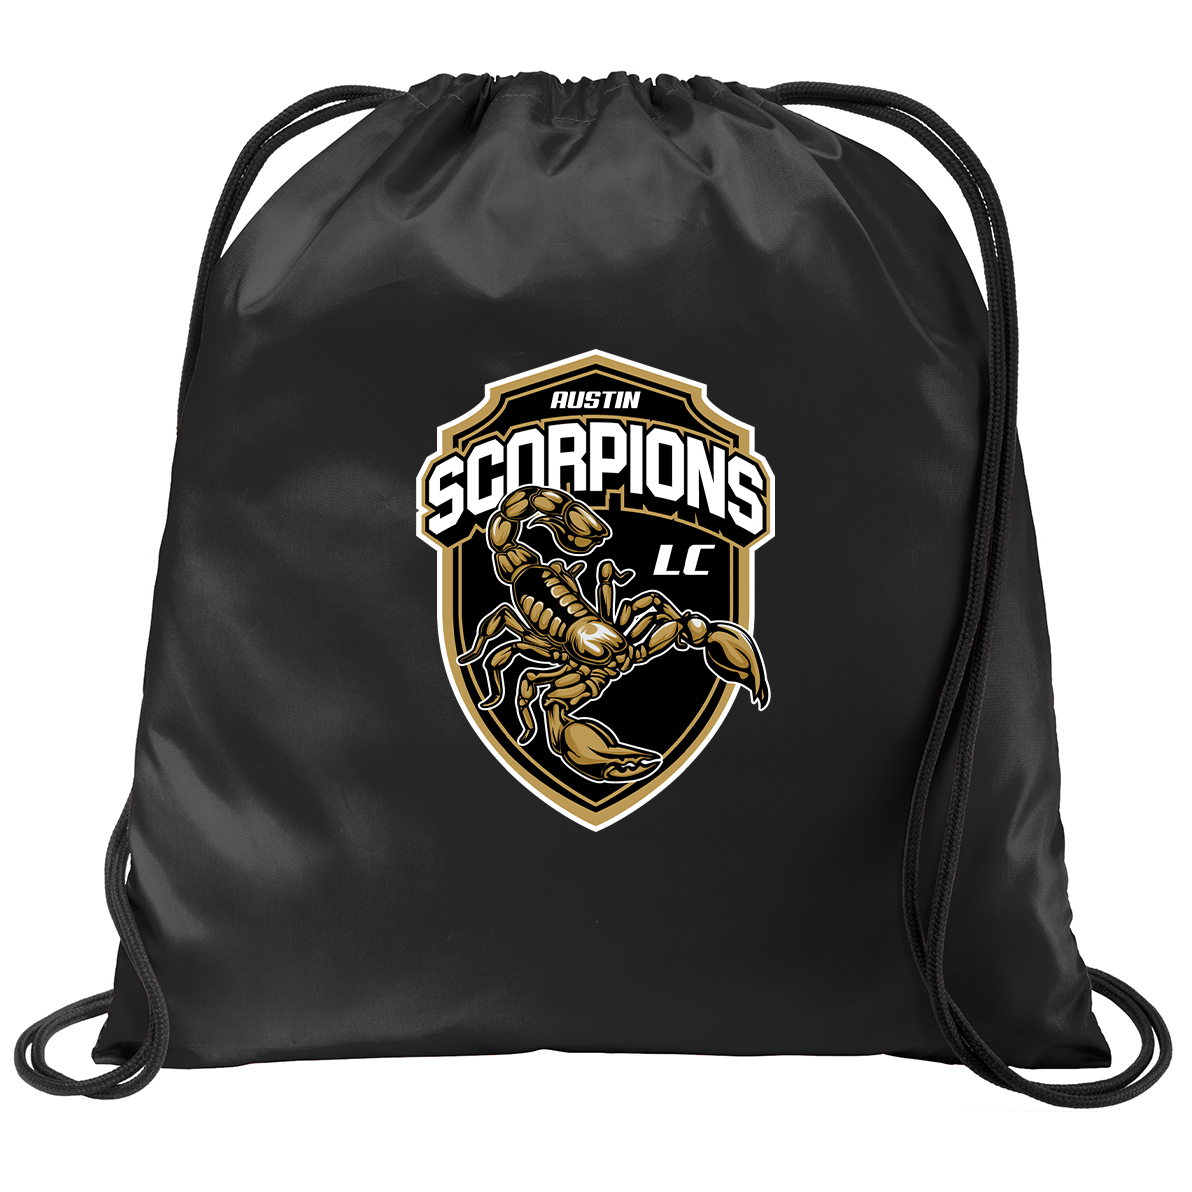 Austin Scorpions Lacrosse Club Cinch Pack